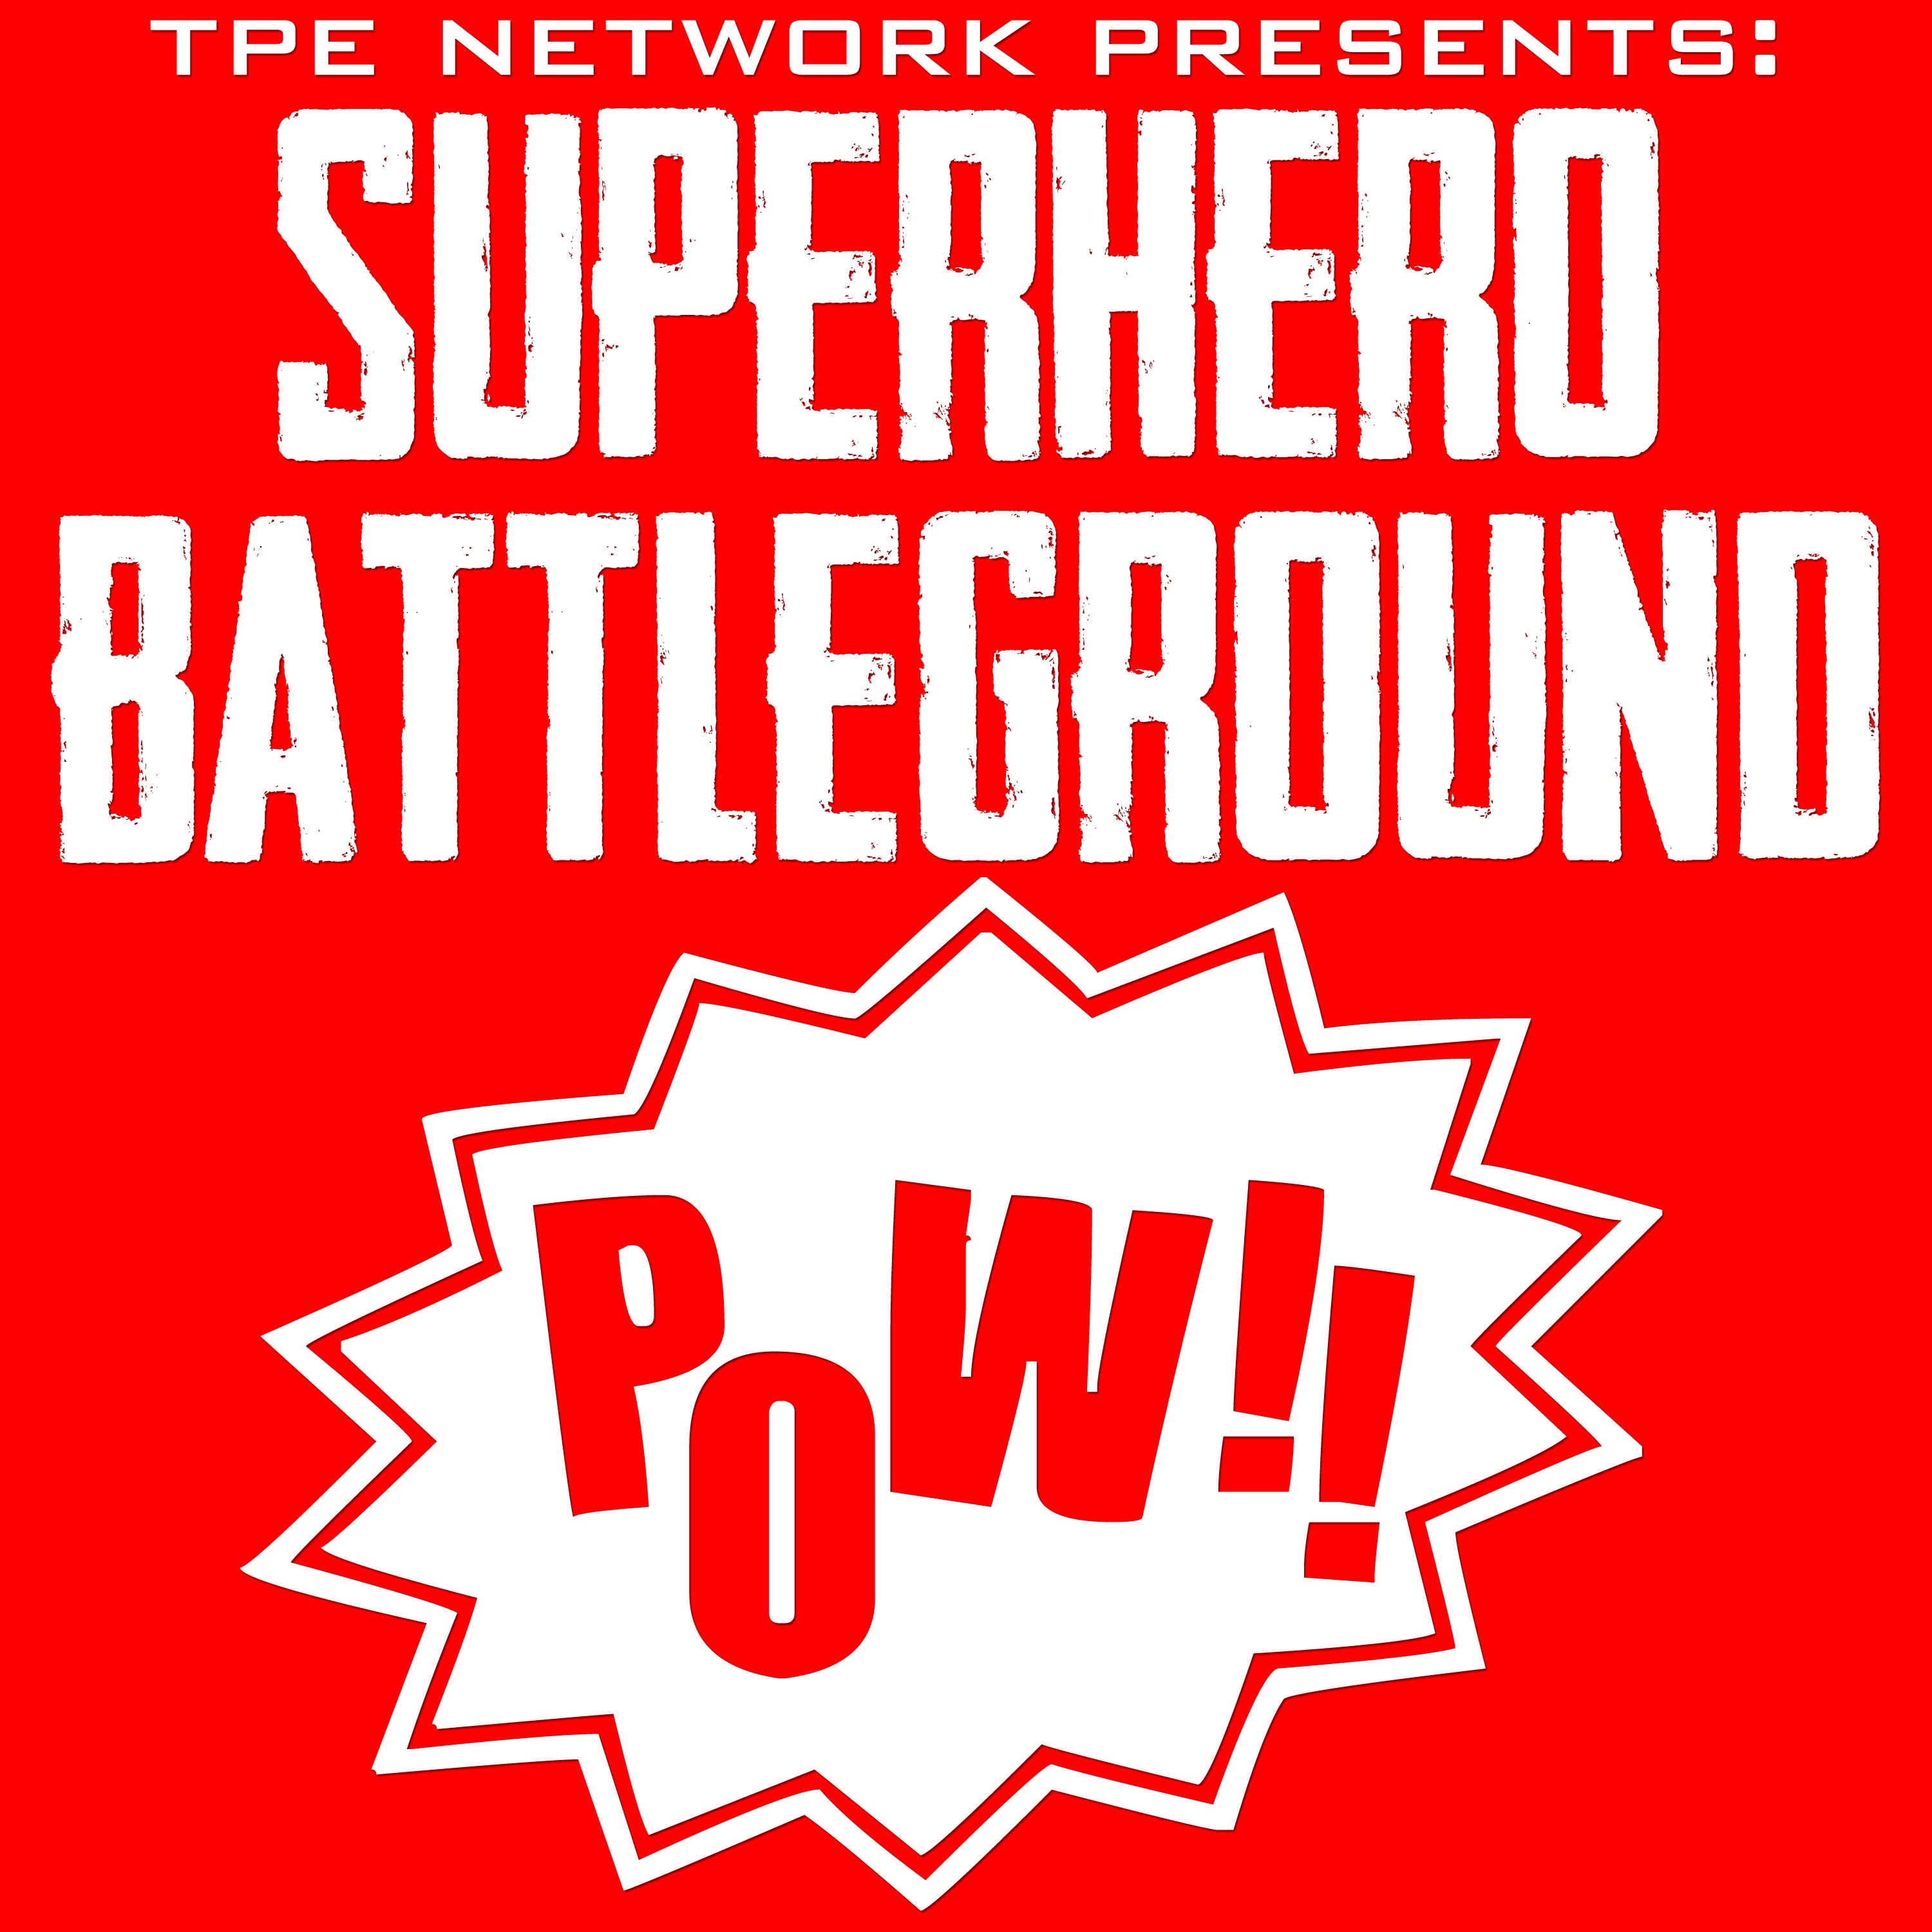 Superhero Battleground